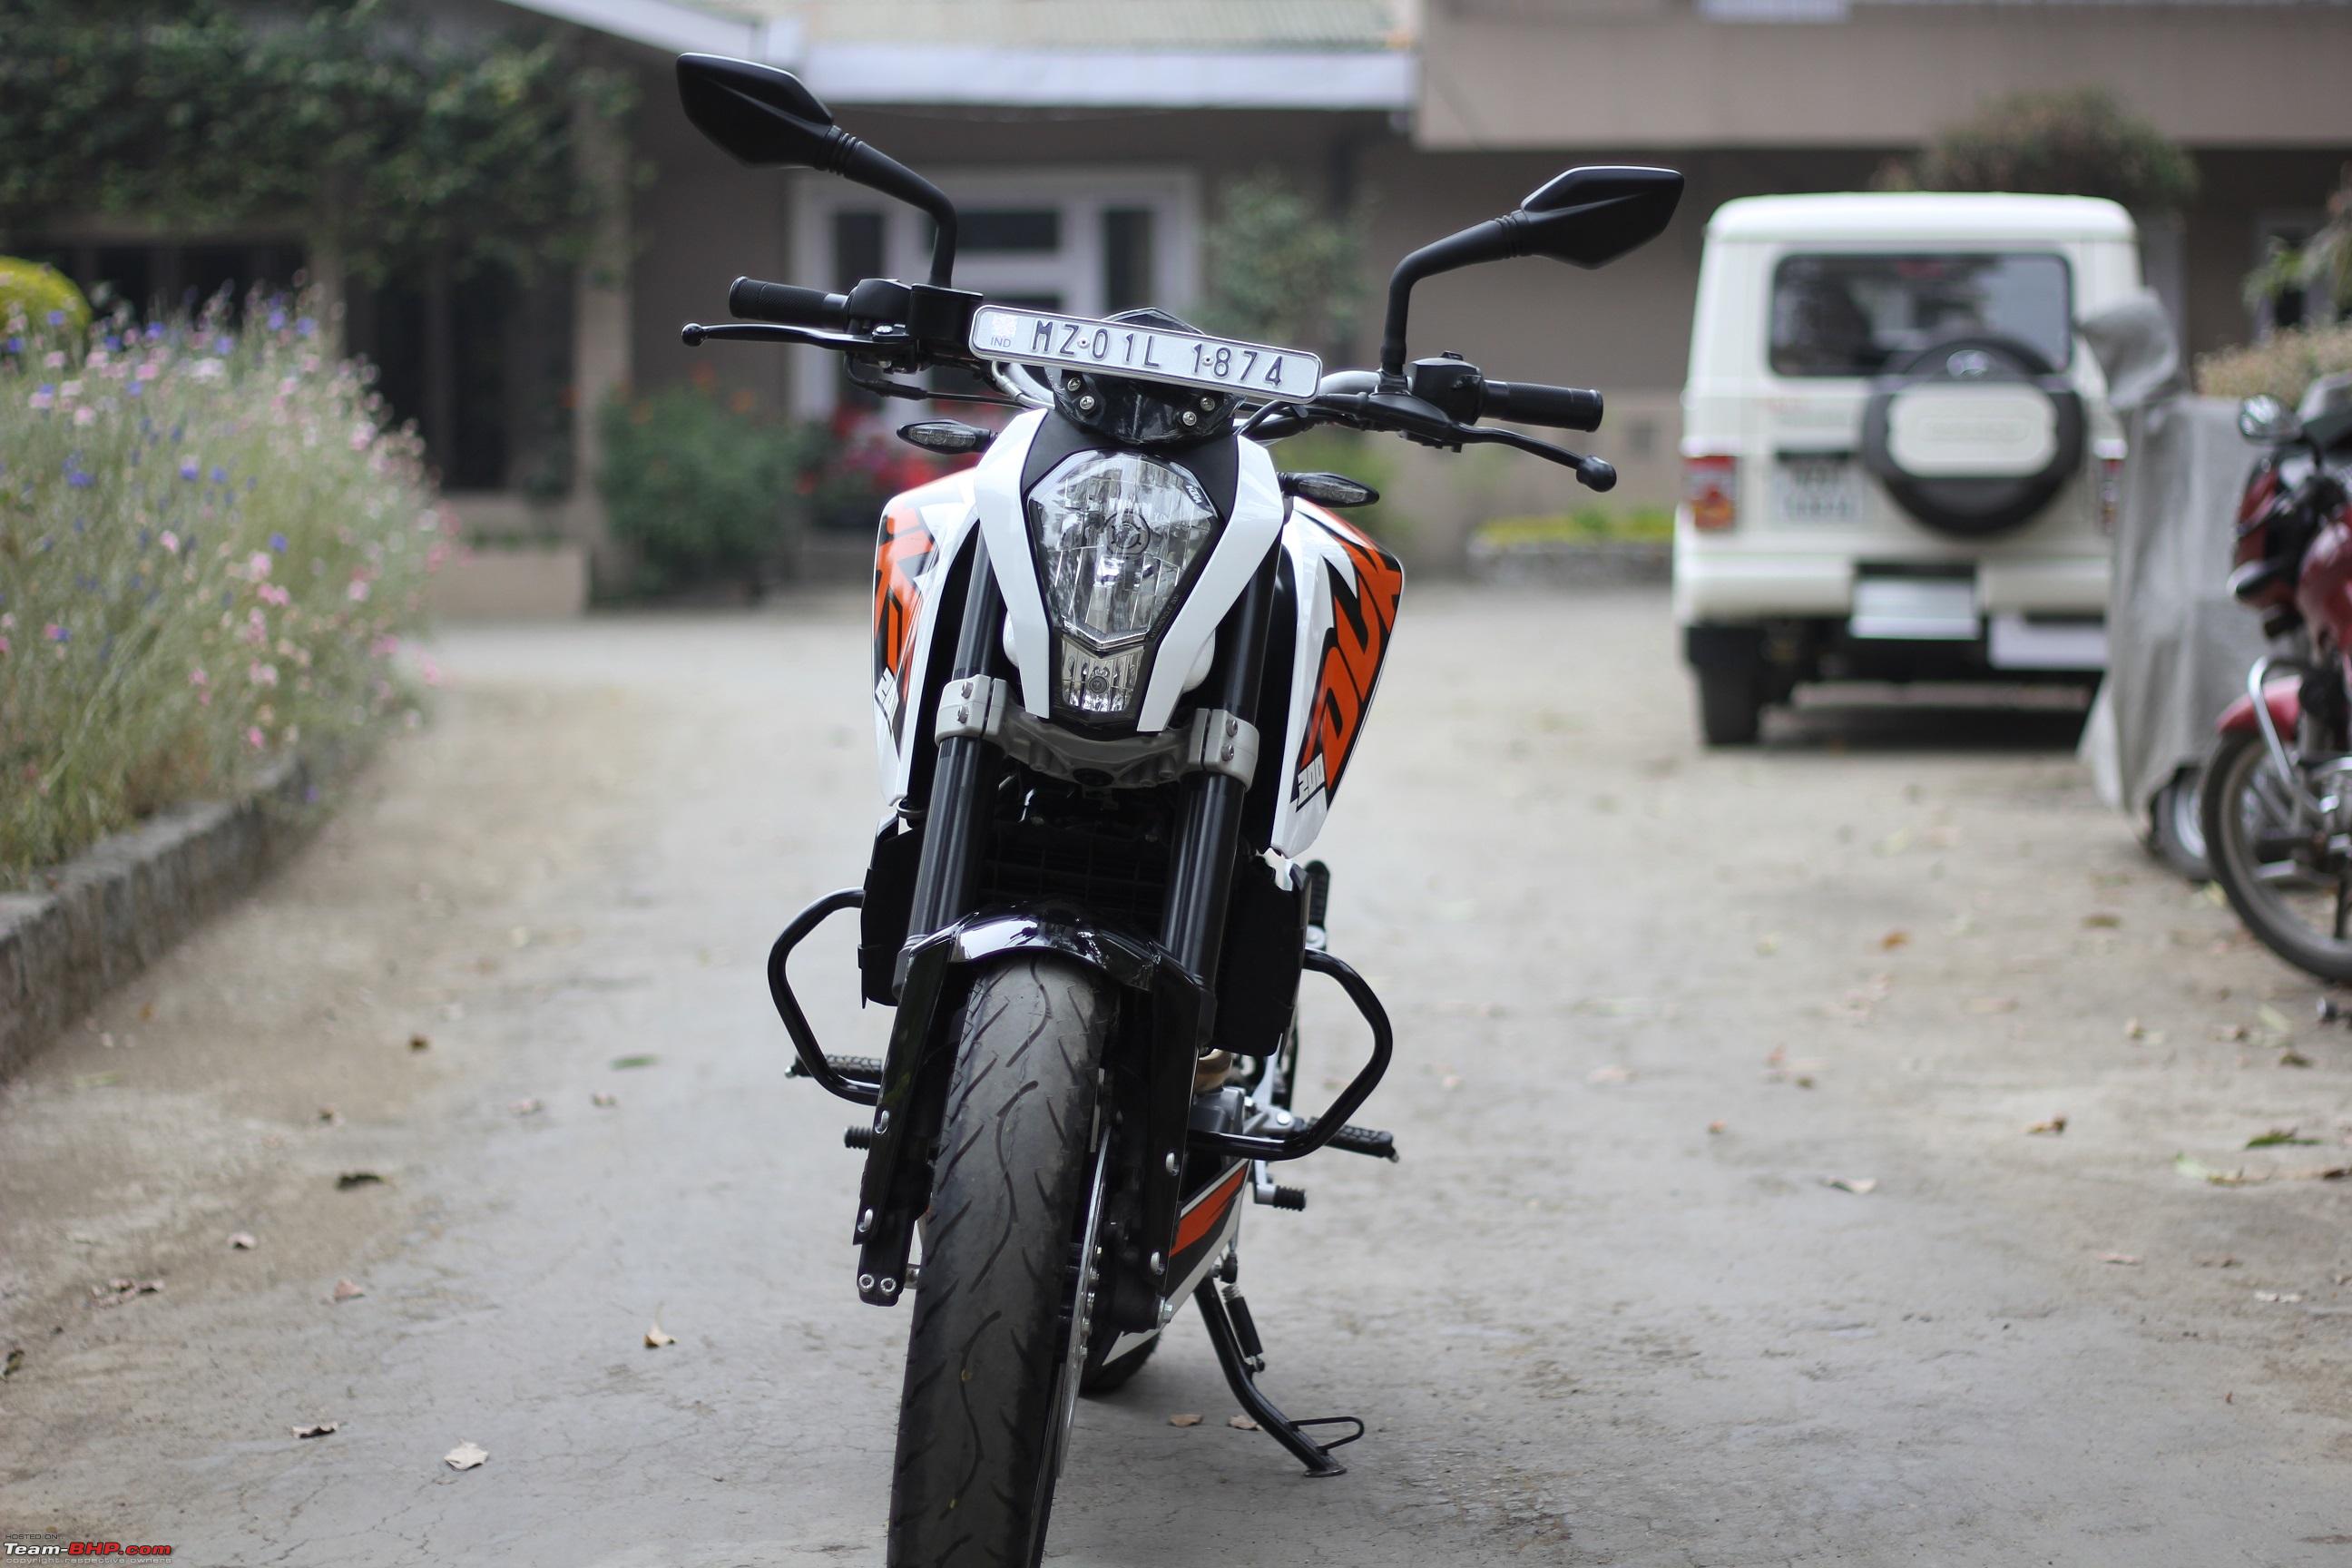 MZ Motorcycles in India. - Team-BHP